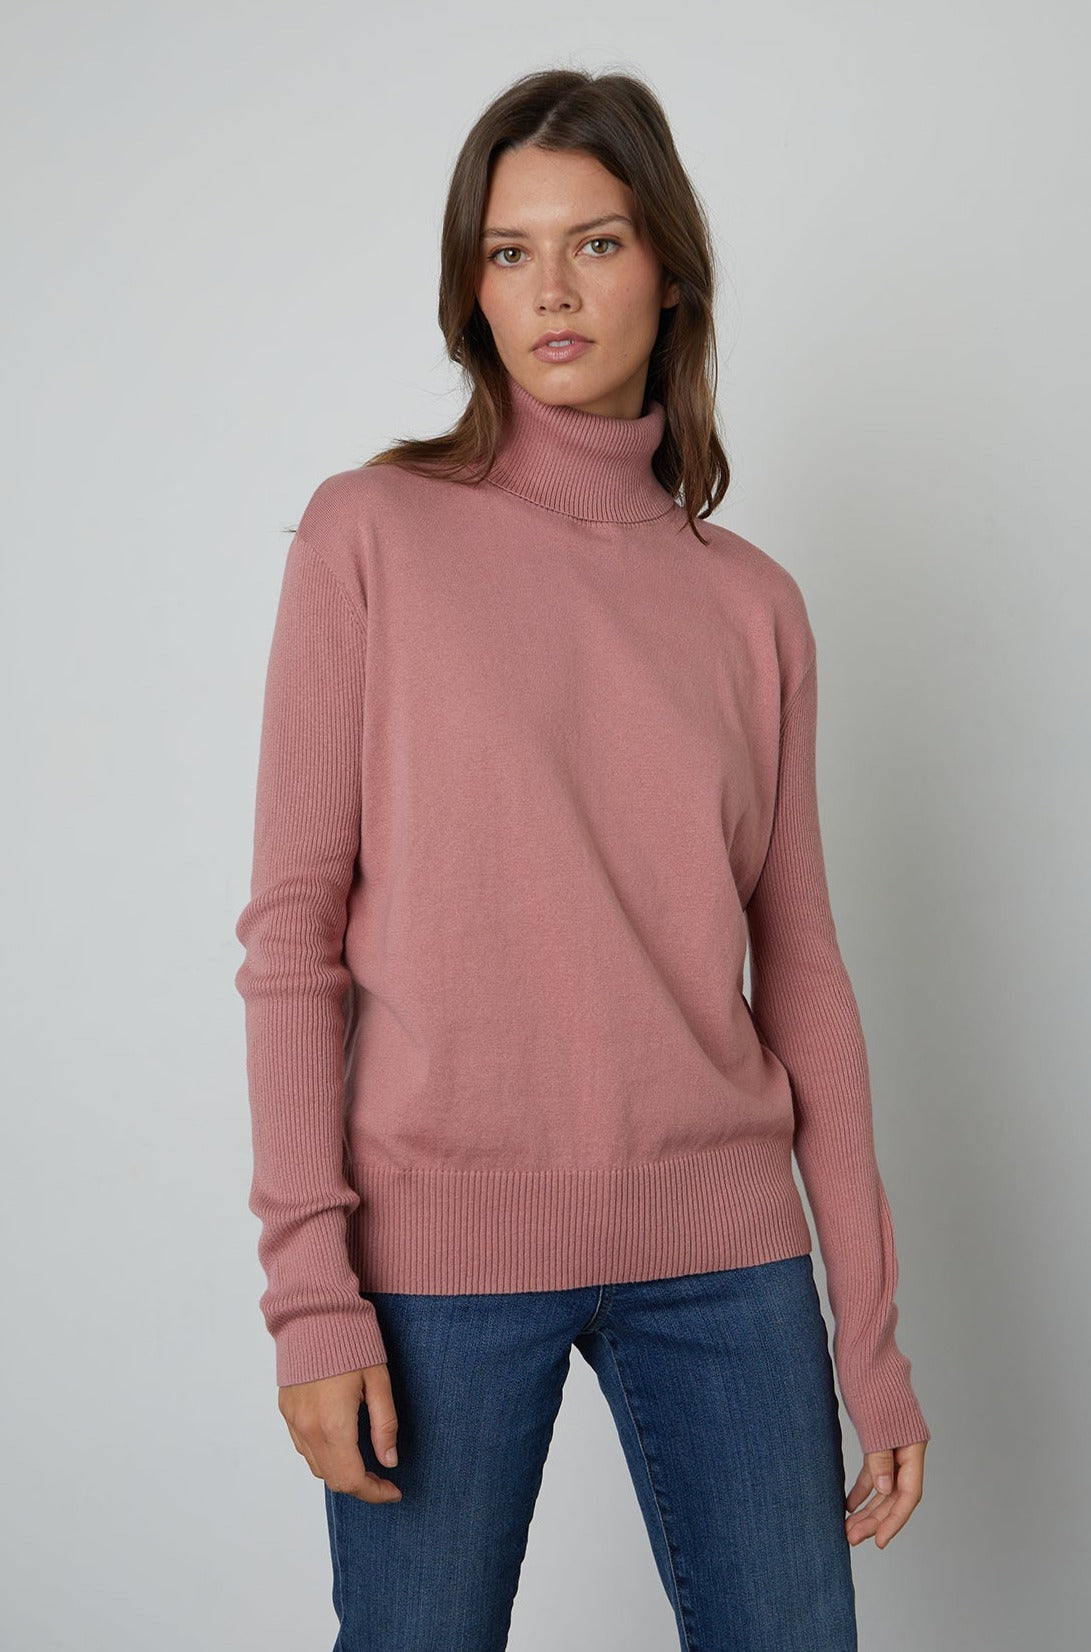 A model wearing a Velvet by Graham & Spencer RENNY turtleneck sweater for fall.-25583814967489